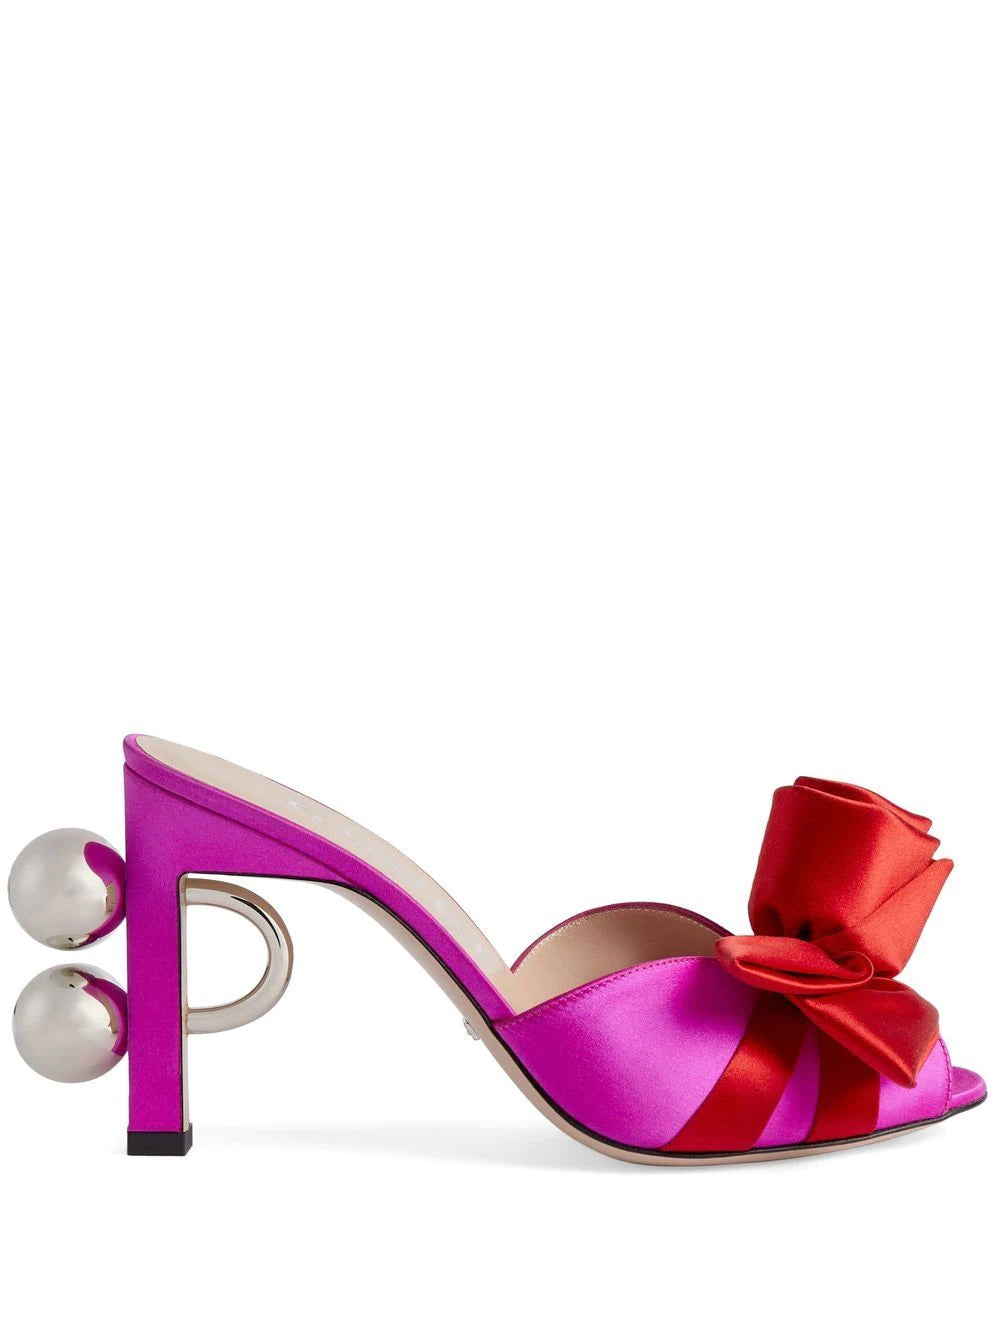 Gucci rose-appliqué satin sandals